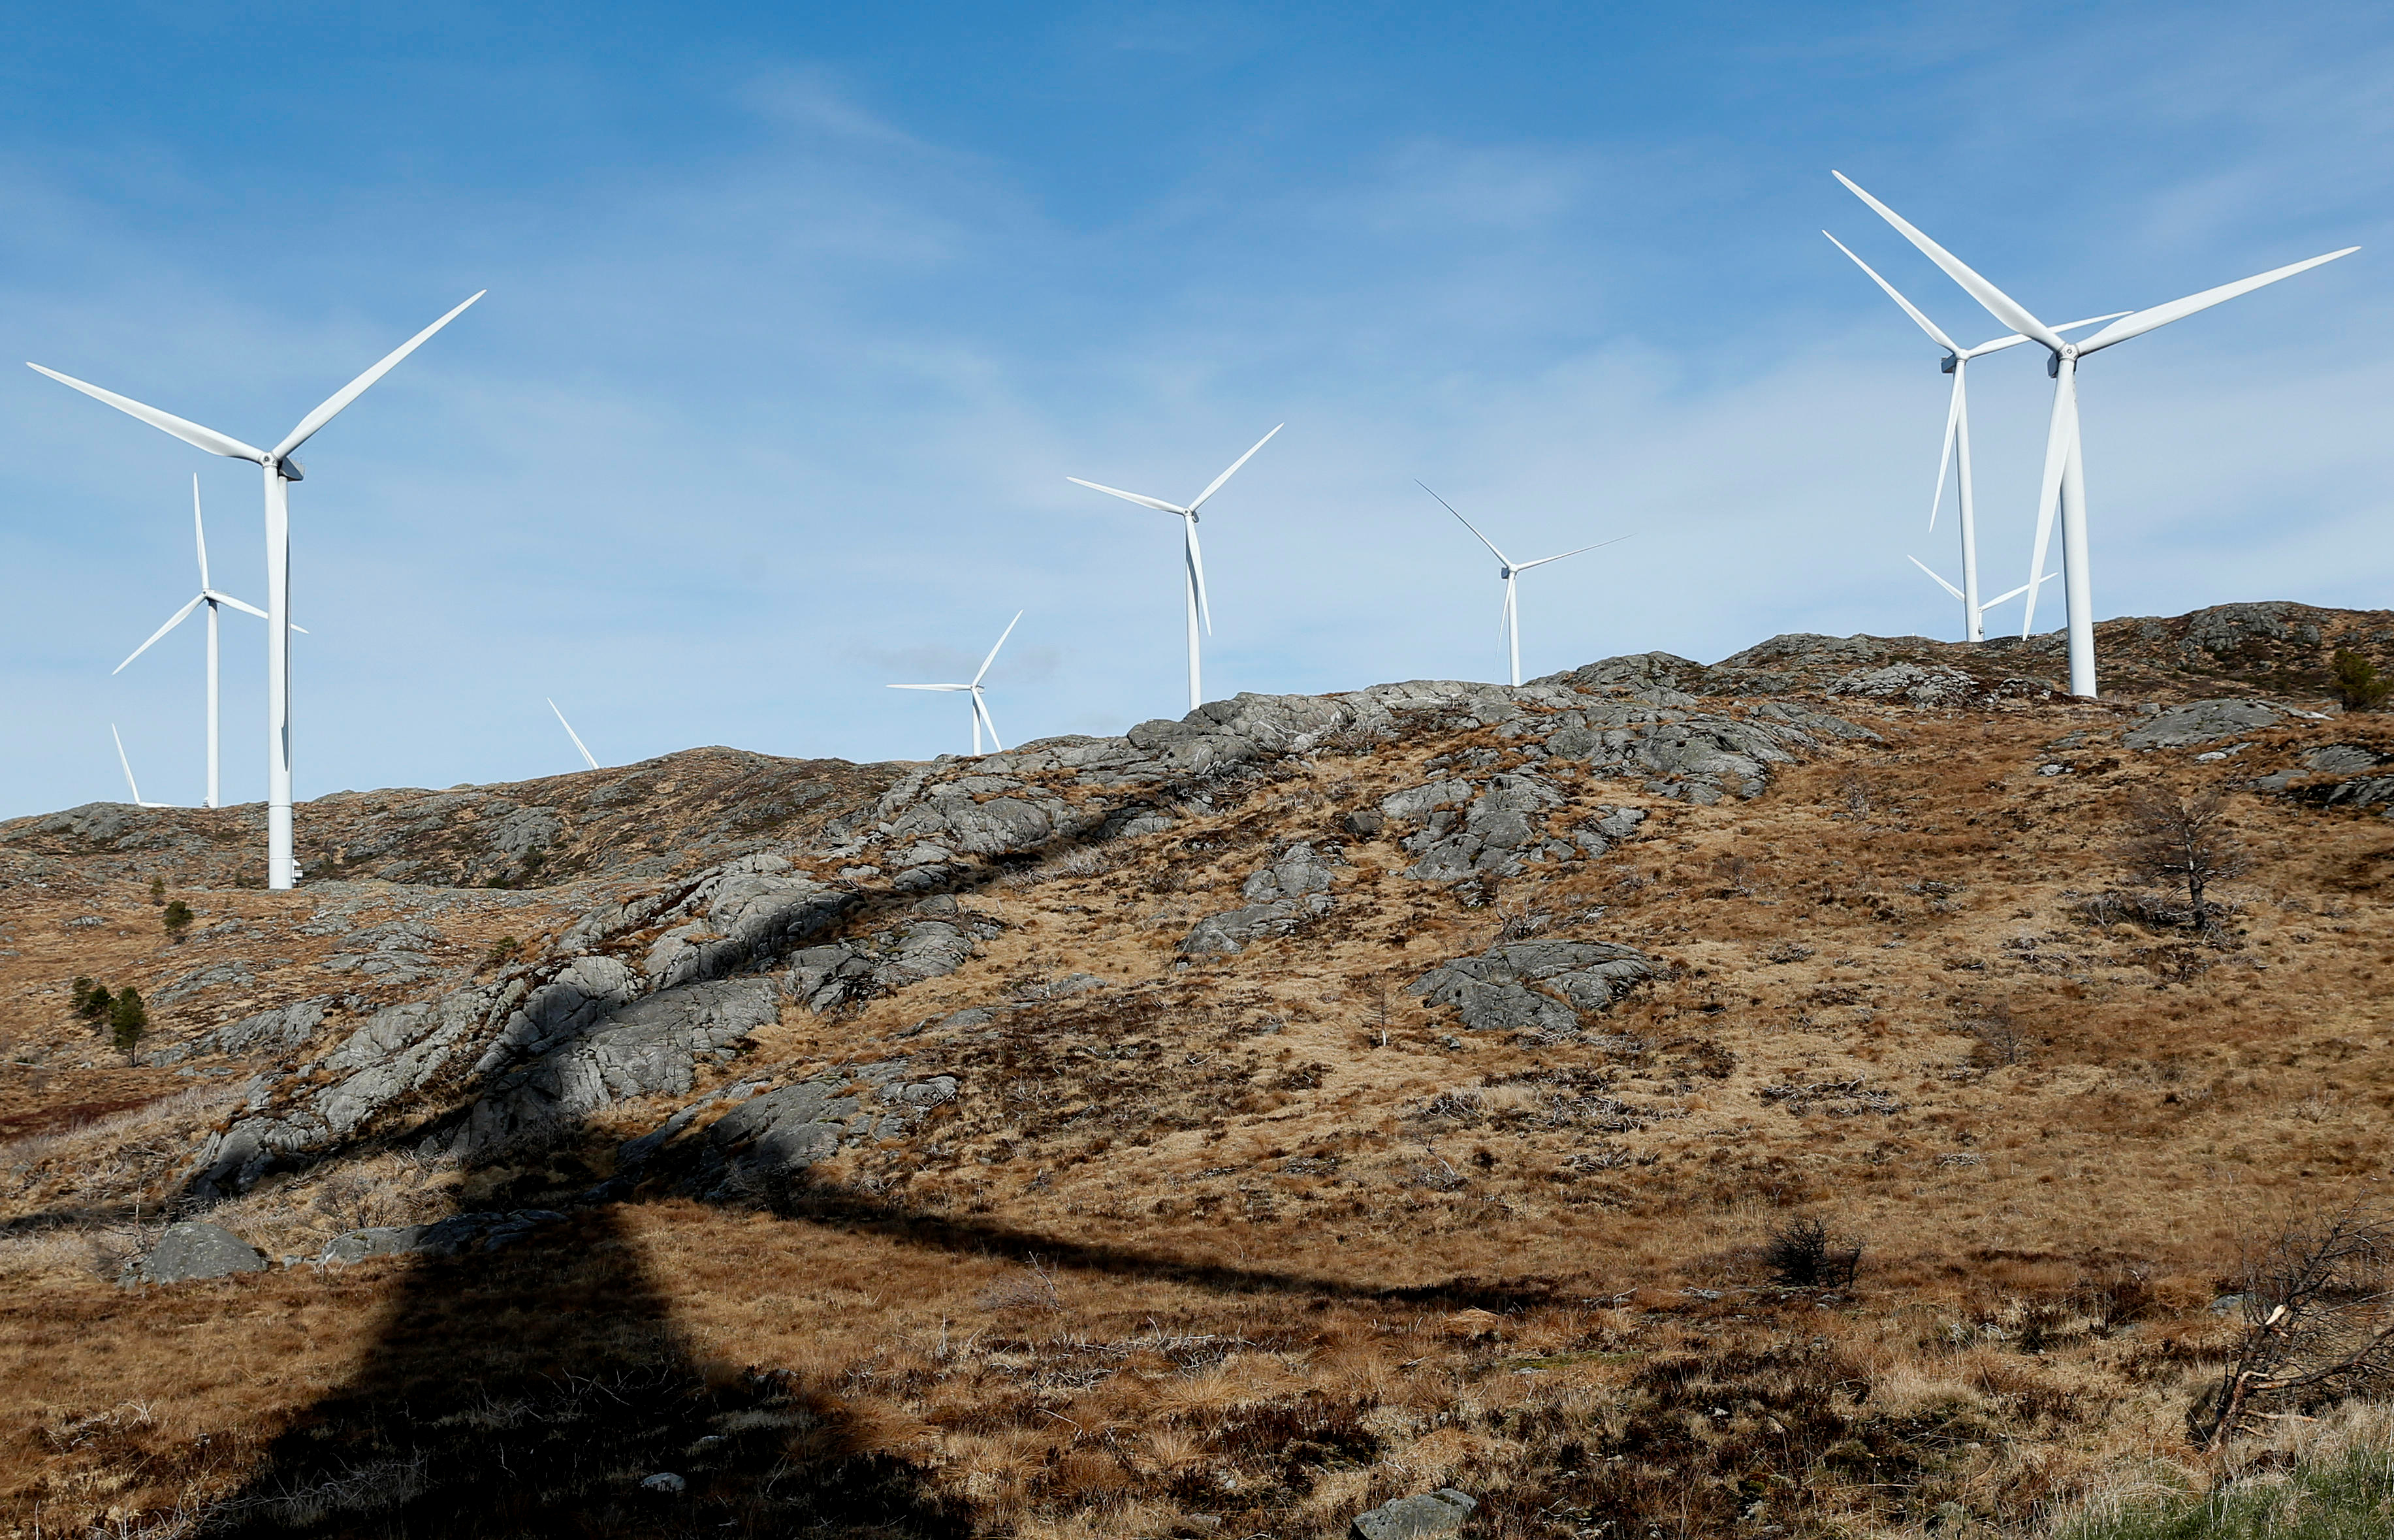 Wind turbines are pictured in Midtfjellet wind farm in Fitjar